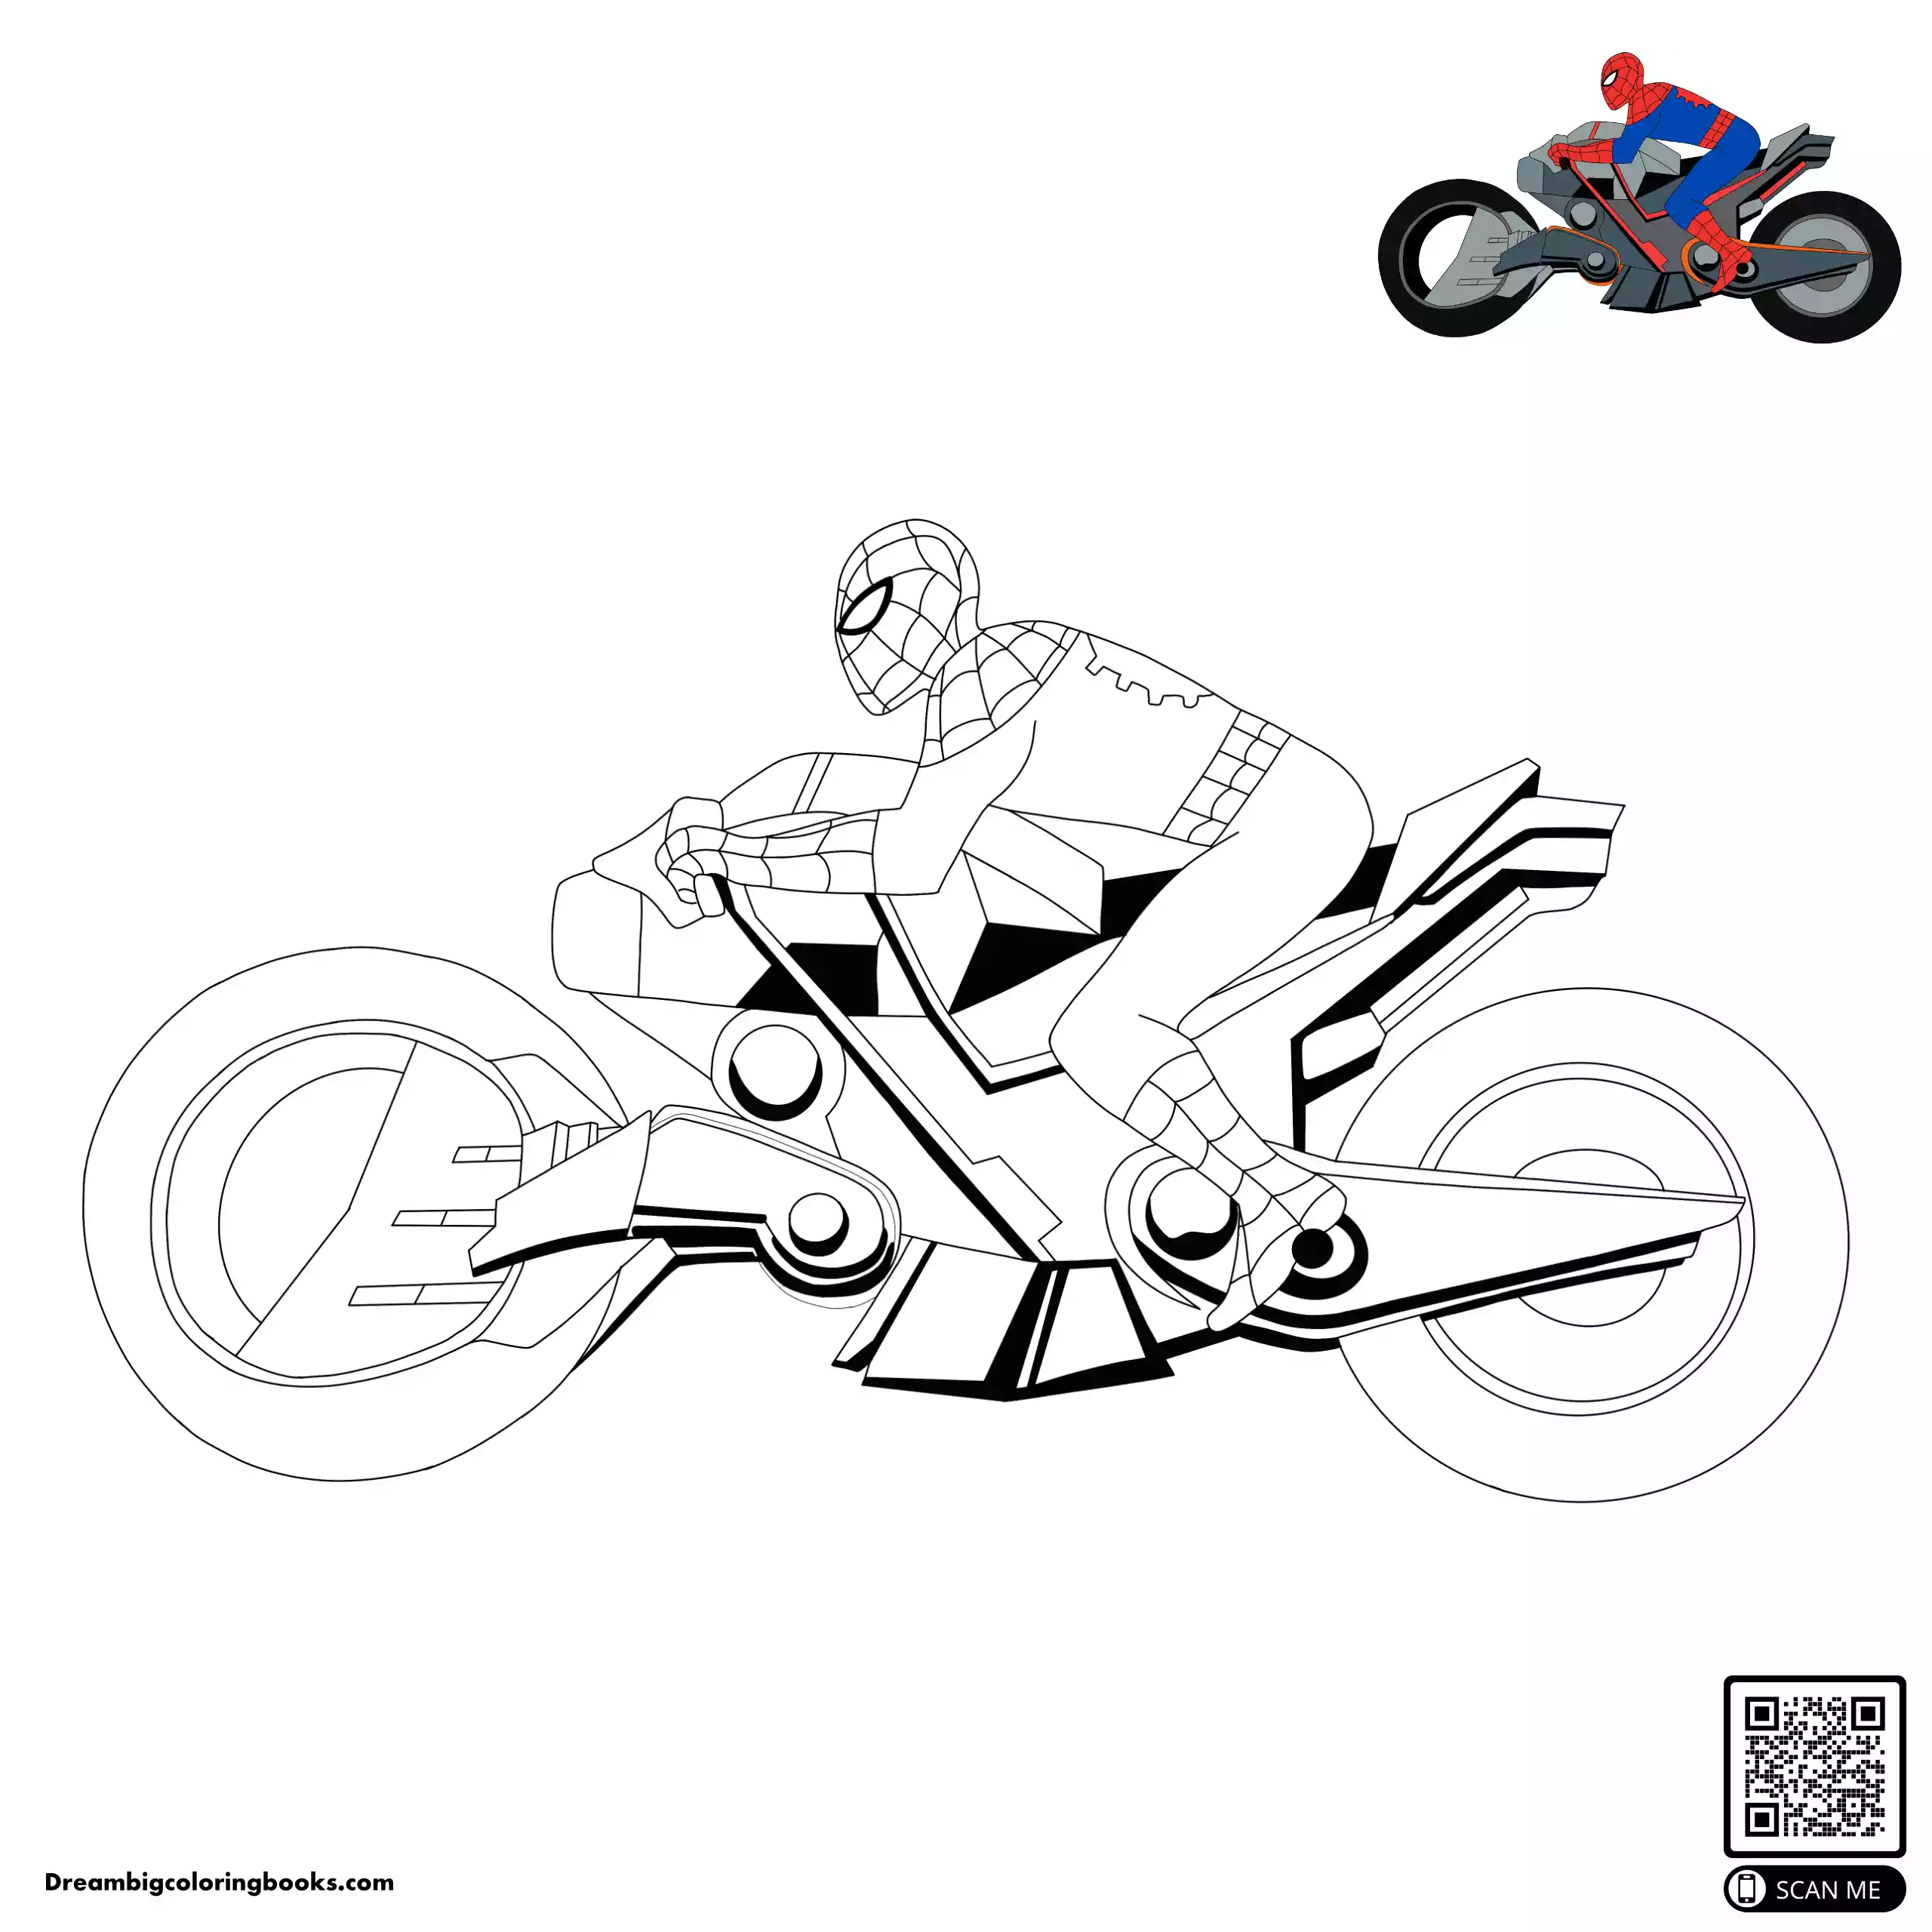 Spiderman Motorcycle coloring sheet